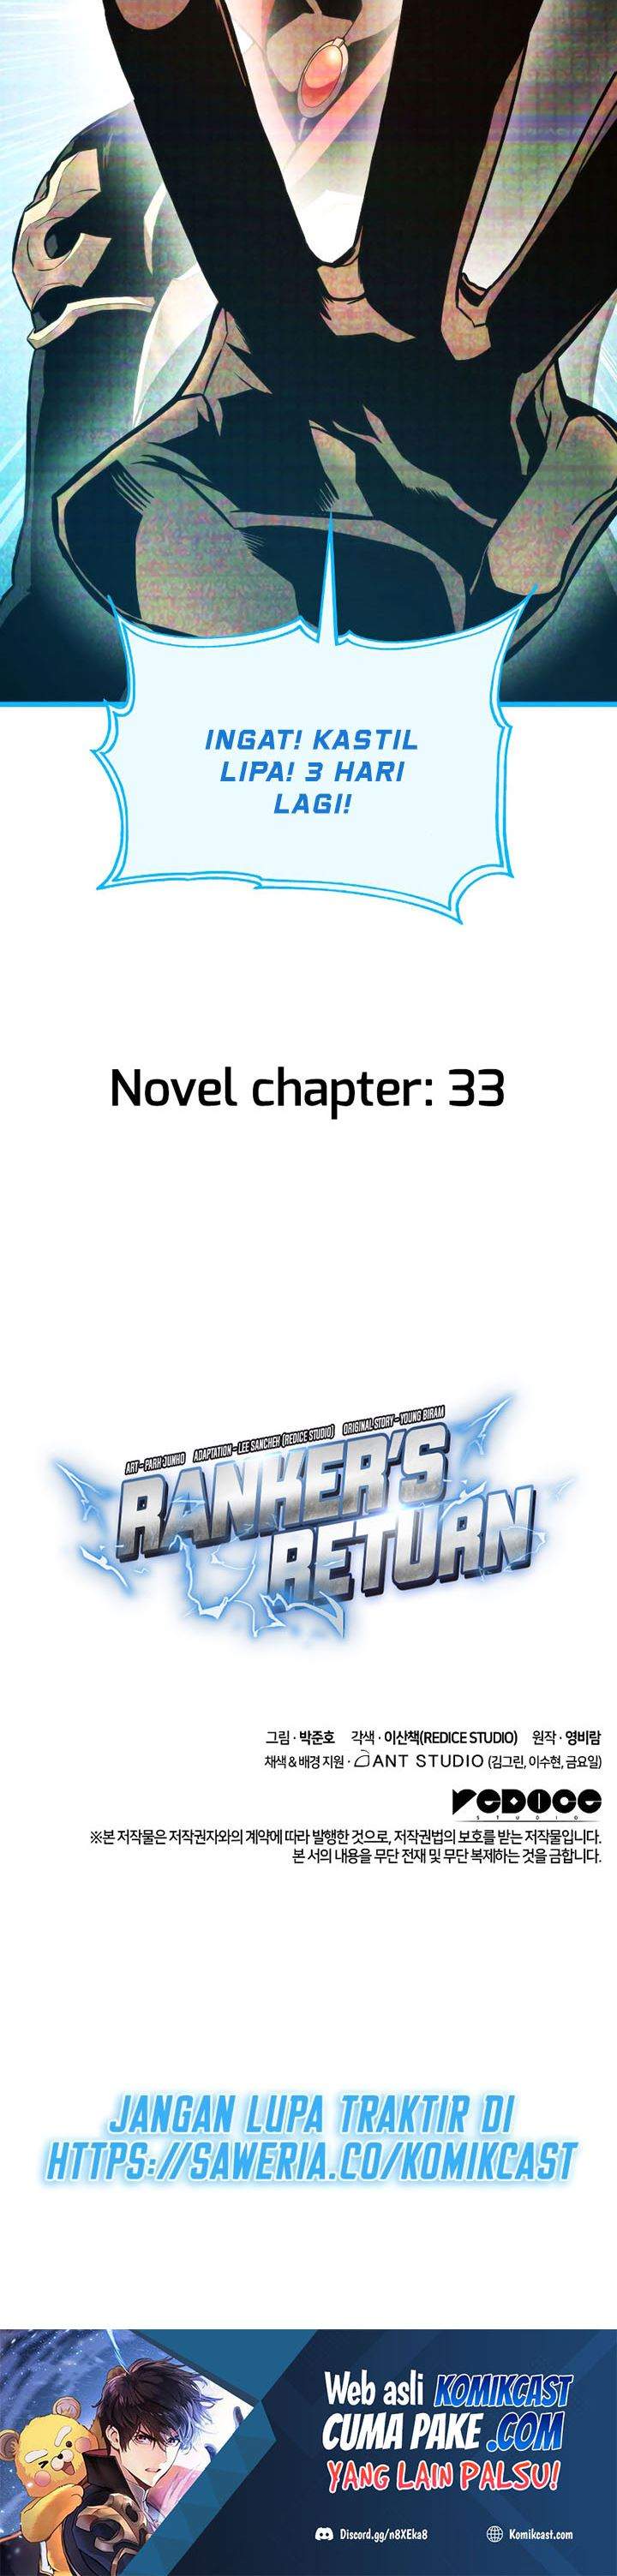 Ranker’s Return (Remake) Chapter 28